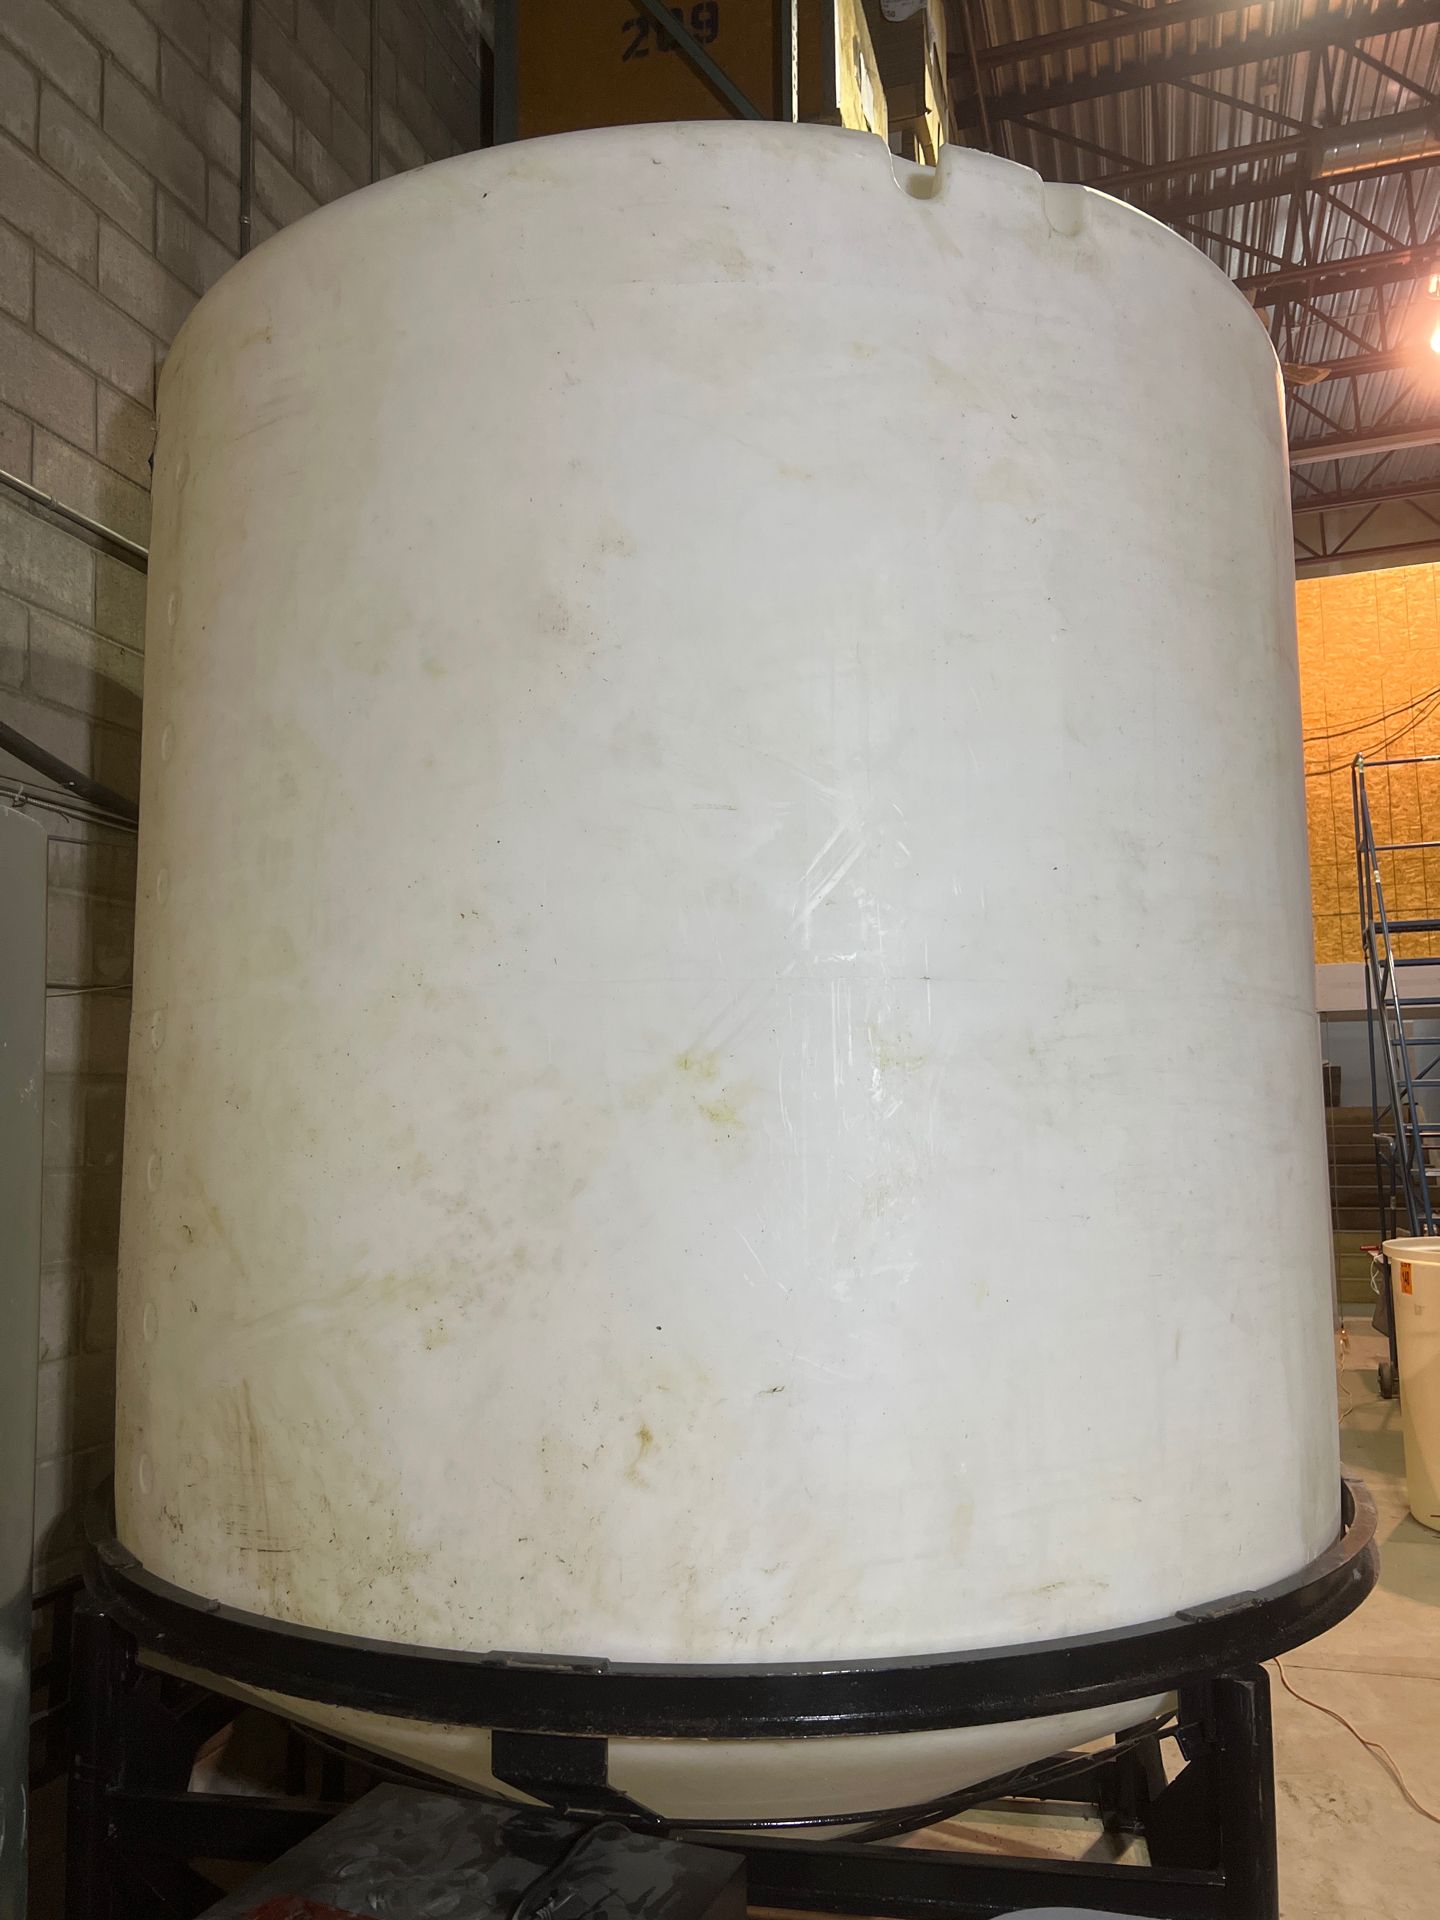 10 000L / 2600ga HDPE Cone-Bottom Tank w/ Steel Base, Center bott. outlet 2’’, w/ 16’’ lid - UNUSED - Image 4 of 4